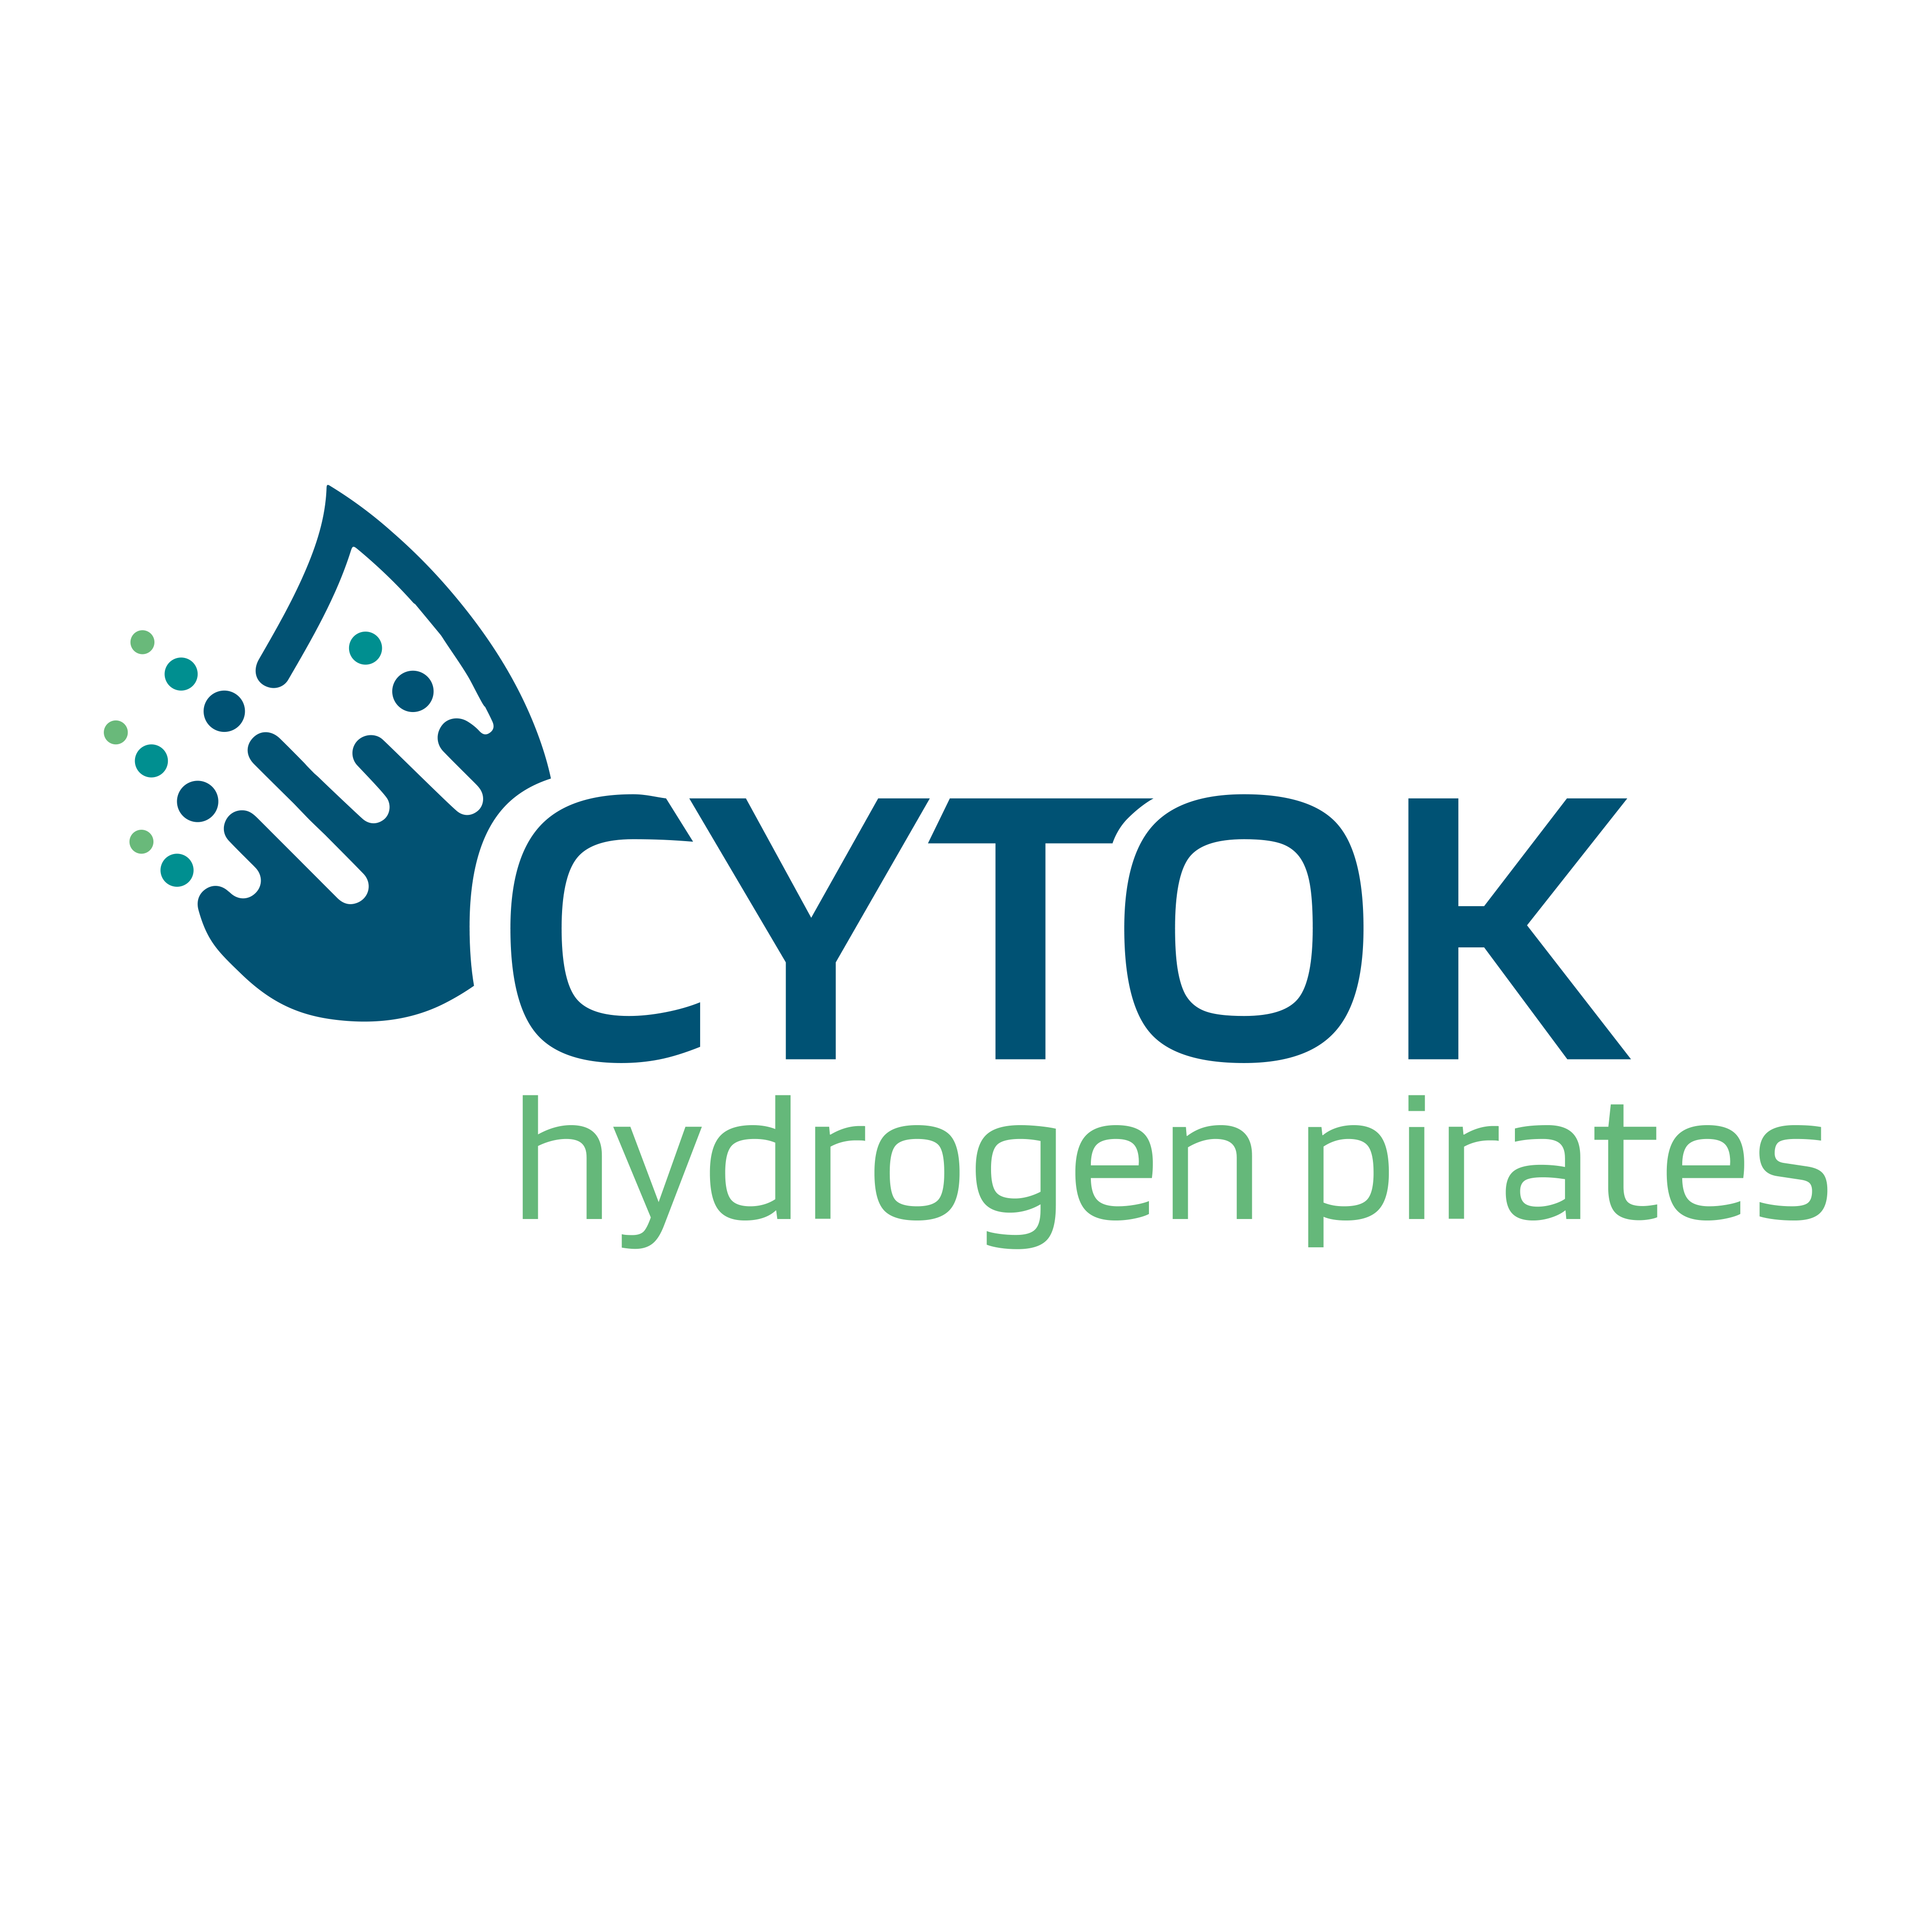 Cytok - hydrogen pirates